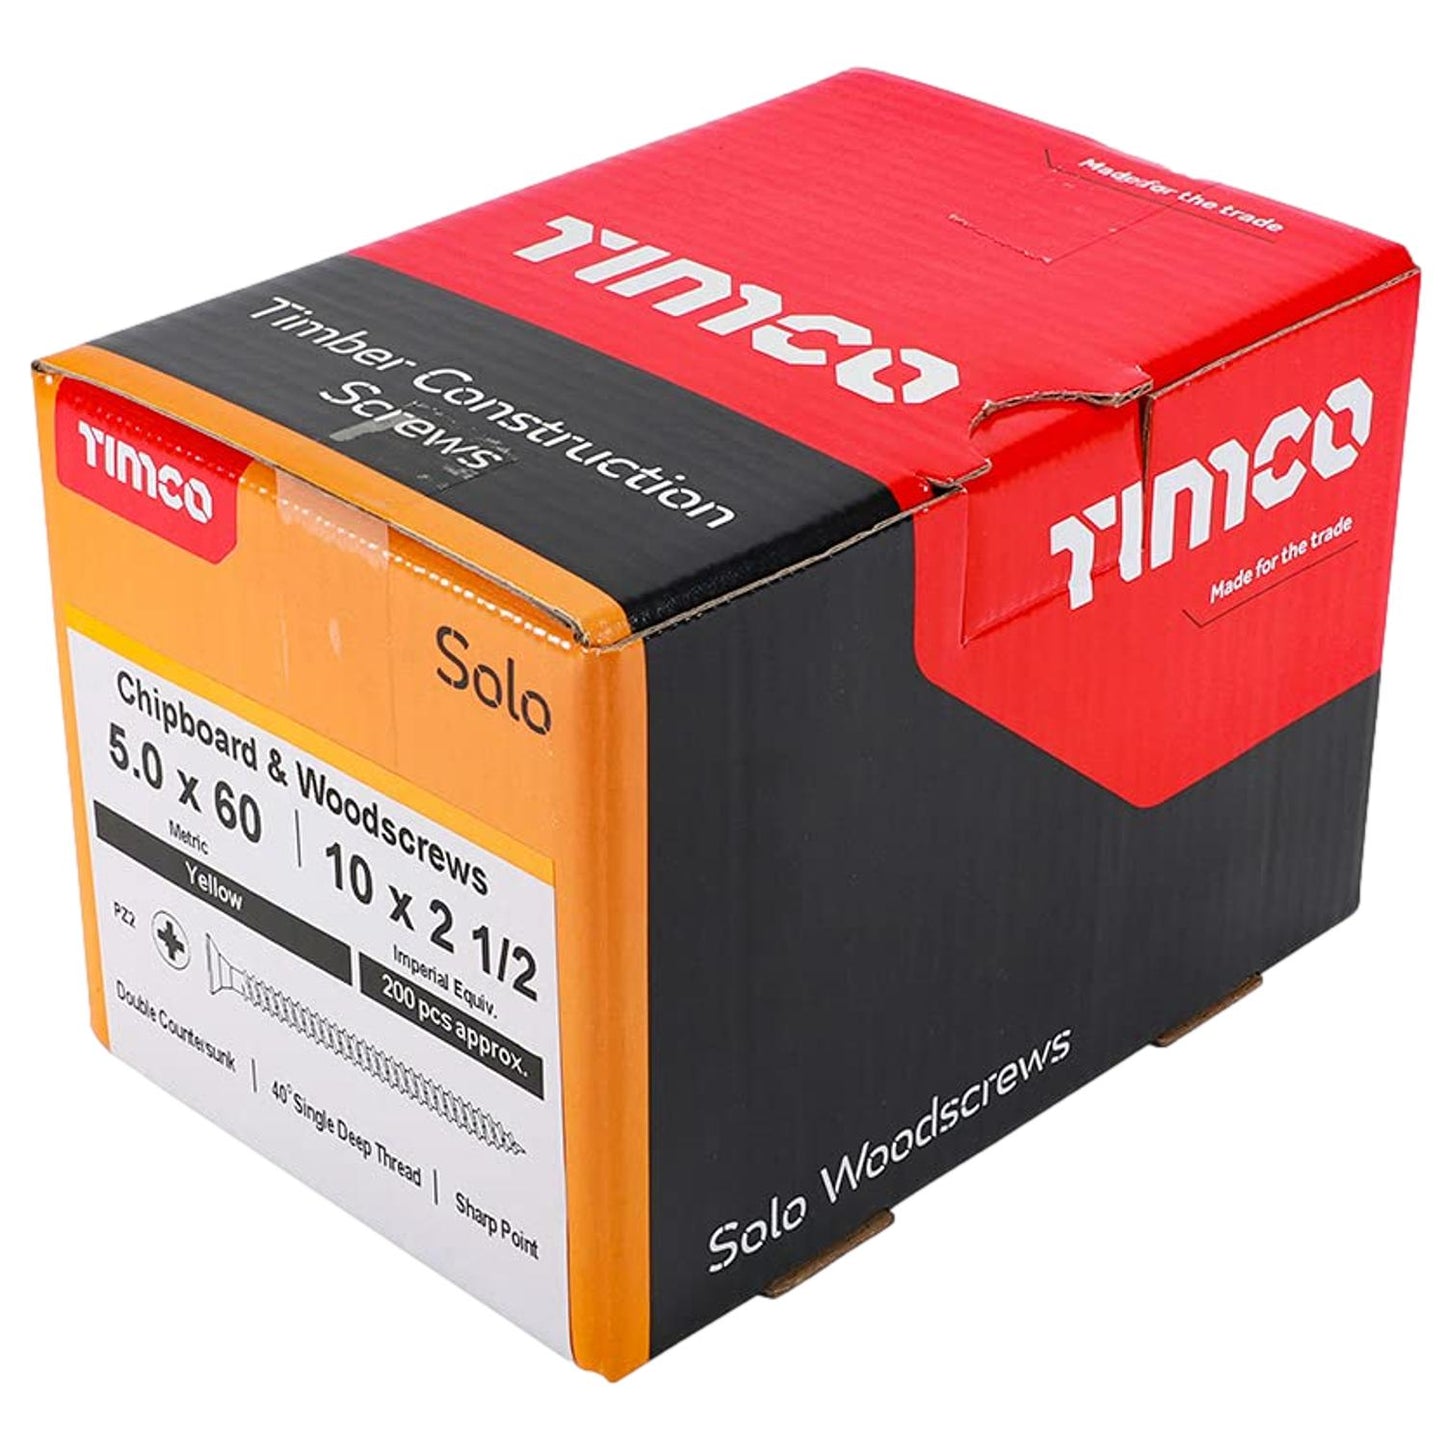 TimCo Solo 5.0 x 60mm Yellow Wood Screw Pozi CS (200 Pack)